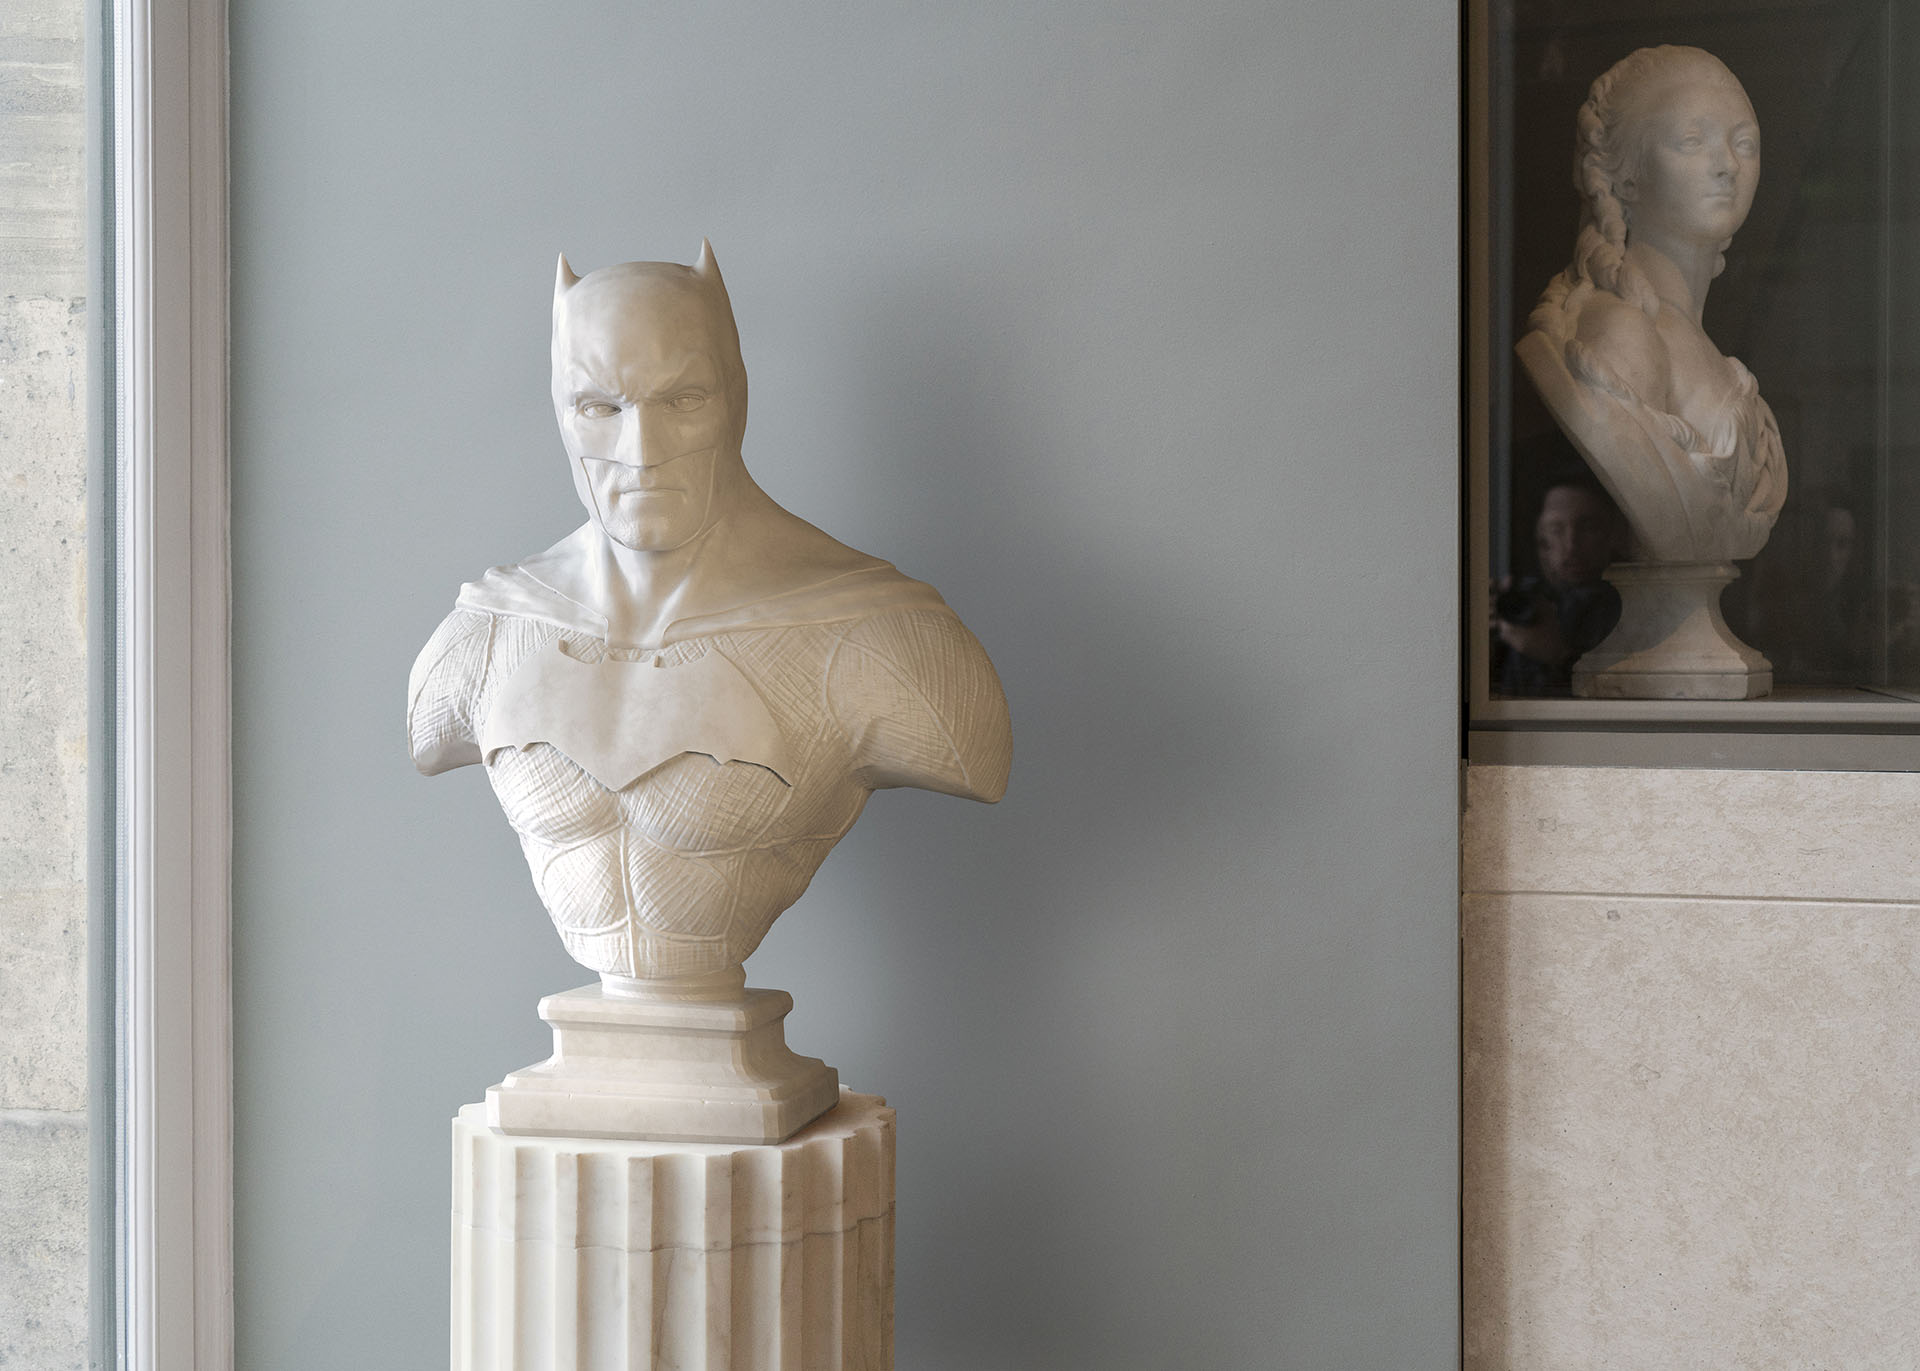 Concept illustration of marble classical head bust sculpture fotomural •  fotomurais branco, super-herói, super